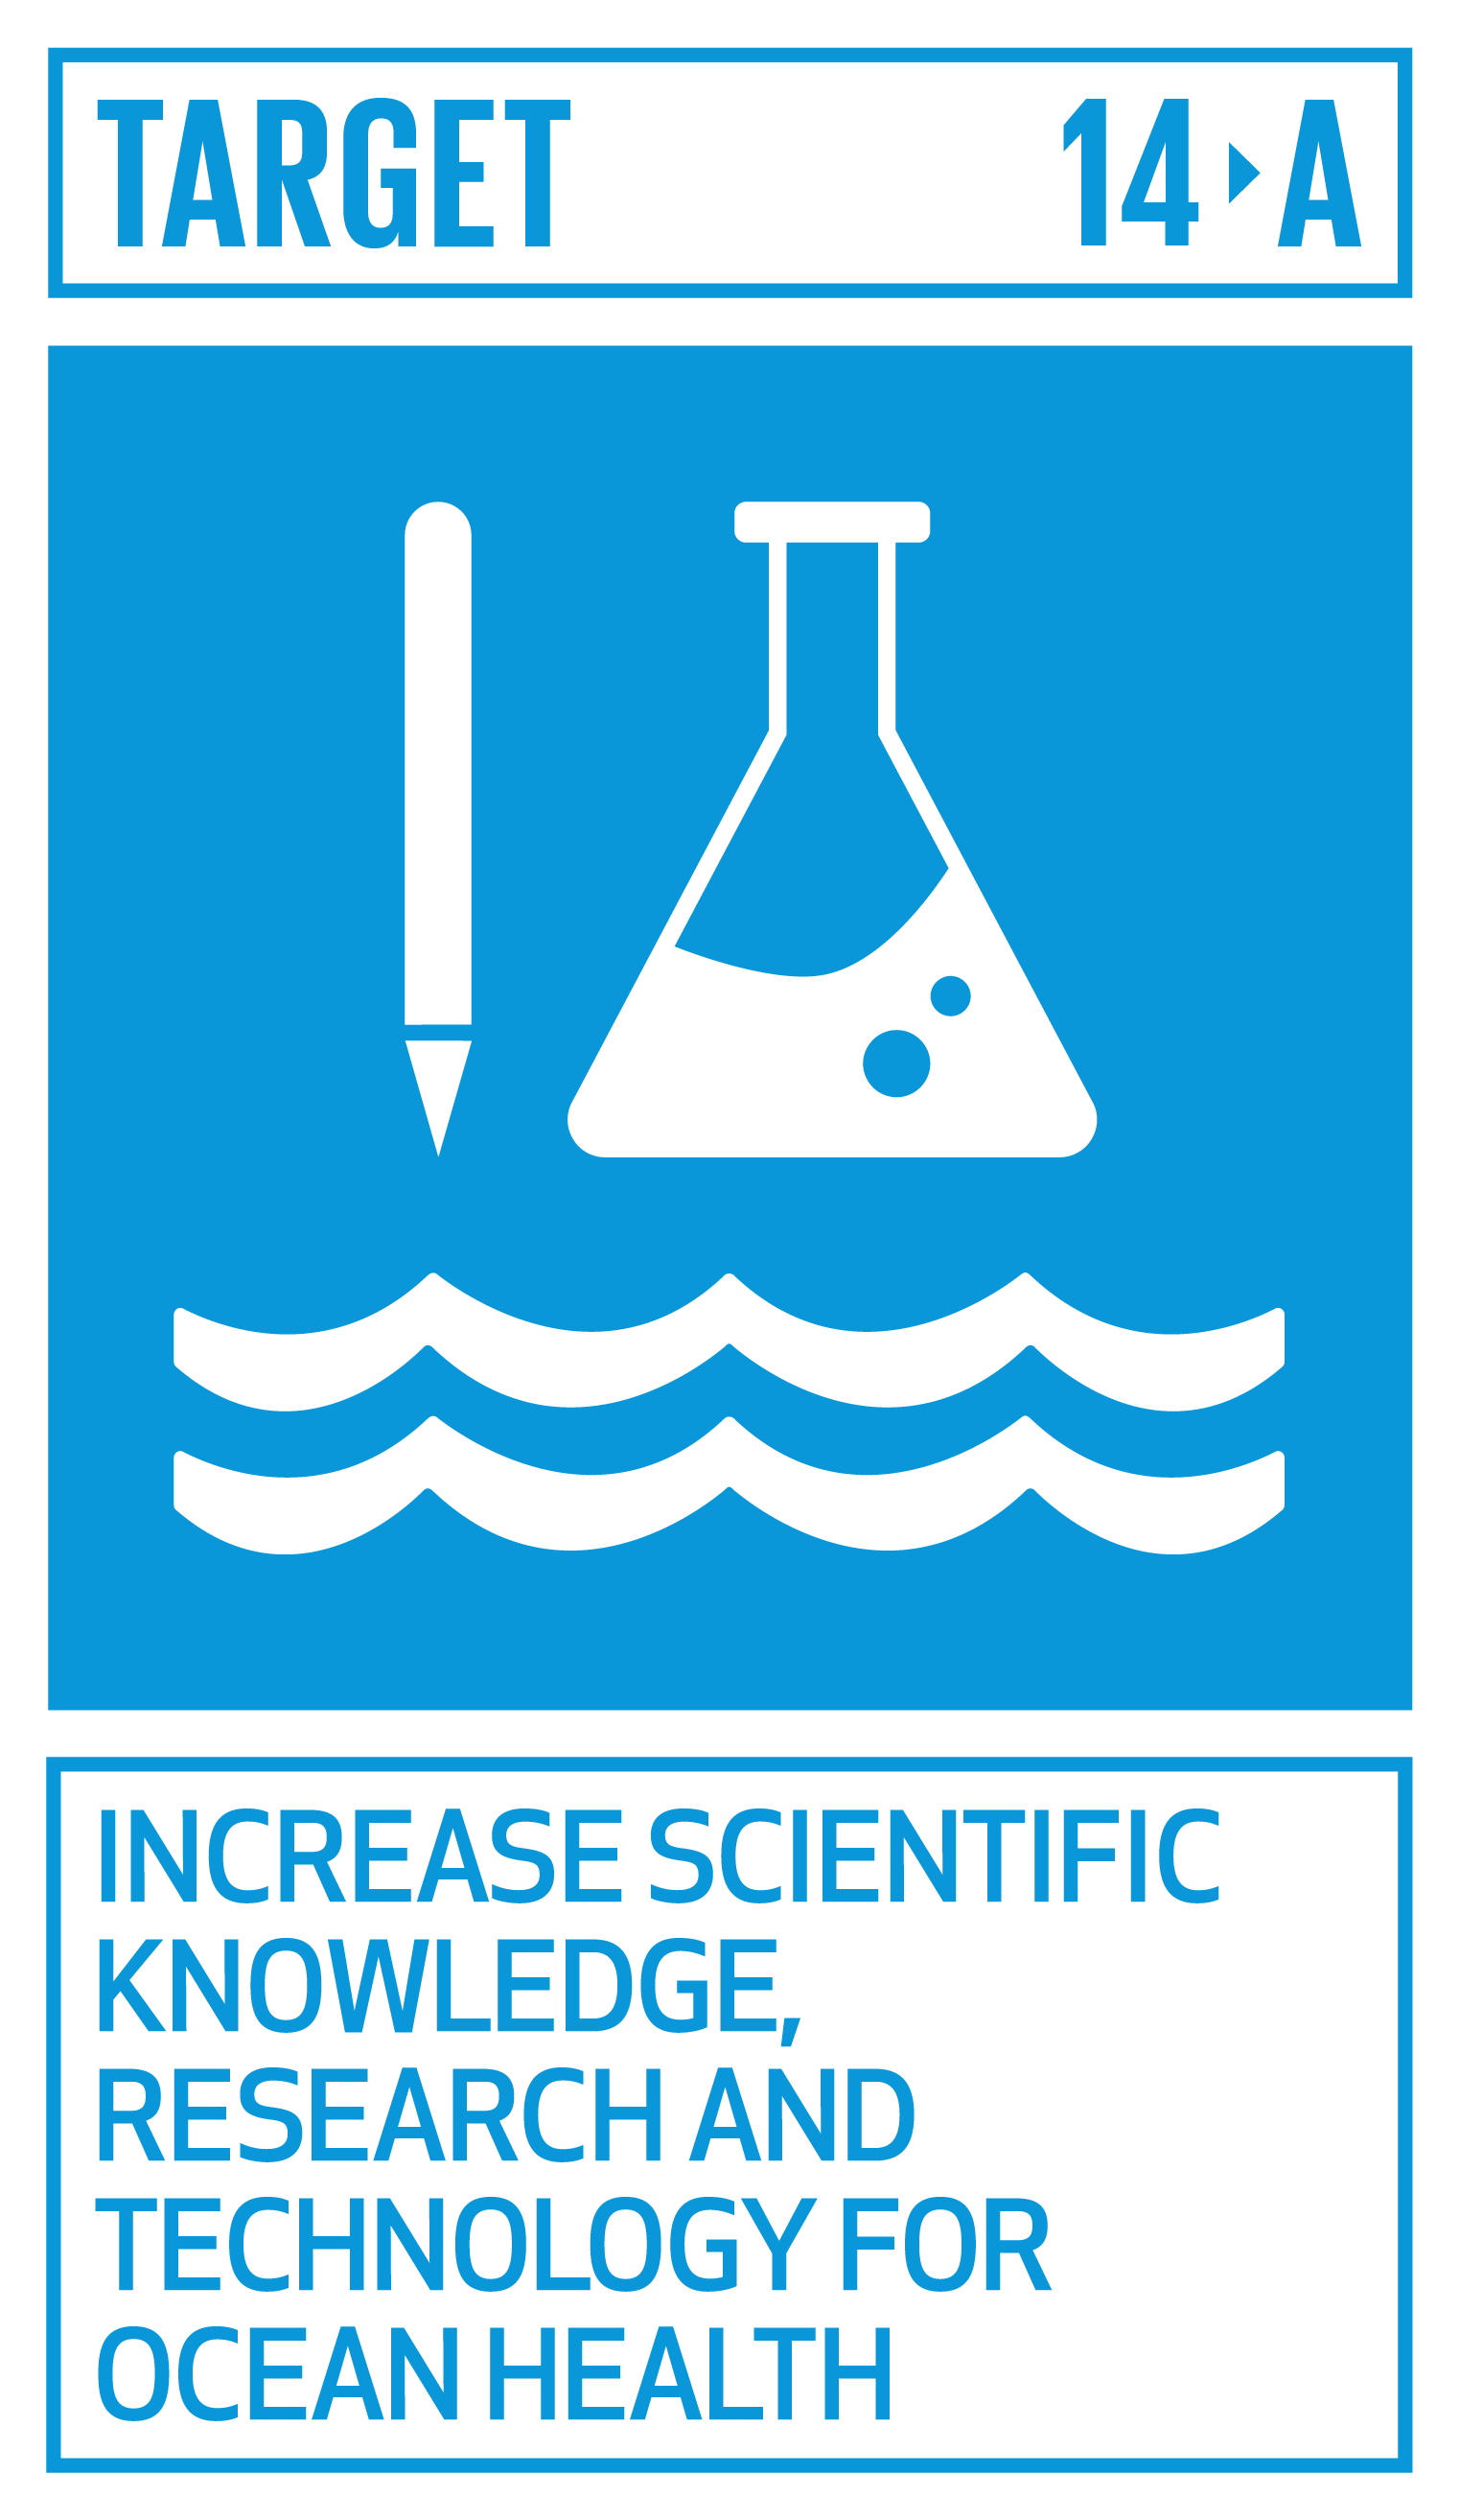 Goal,target,永續發展目標SDGs14,目標14.A新增海洋健康的科學知識、研究和科技